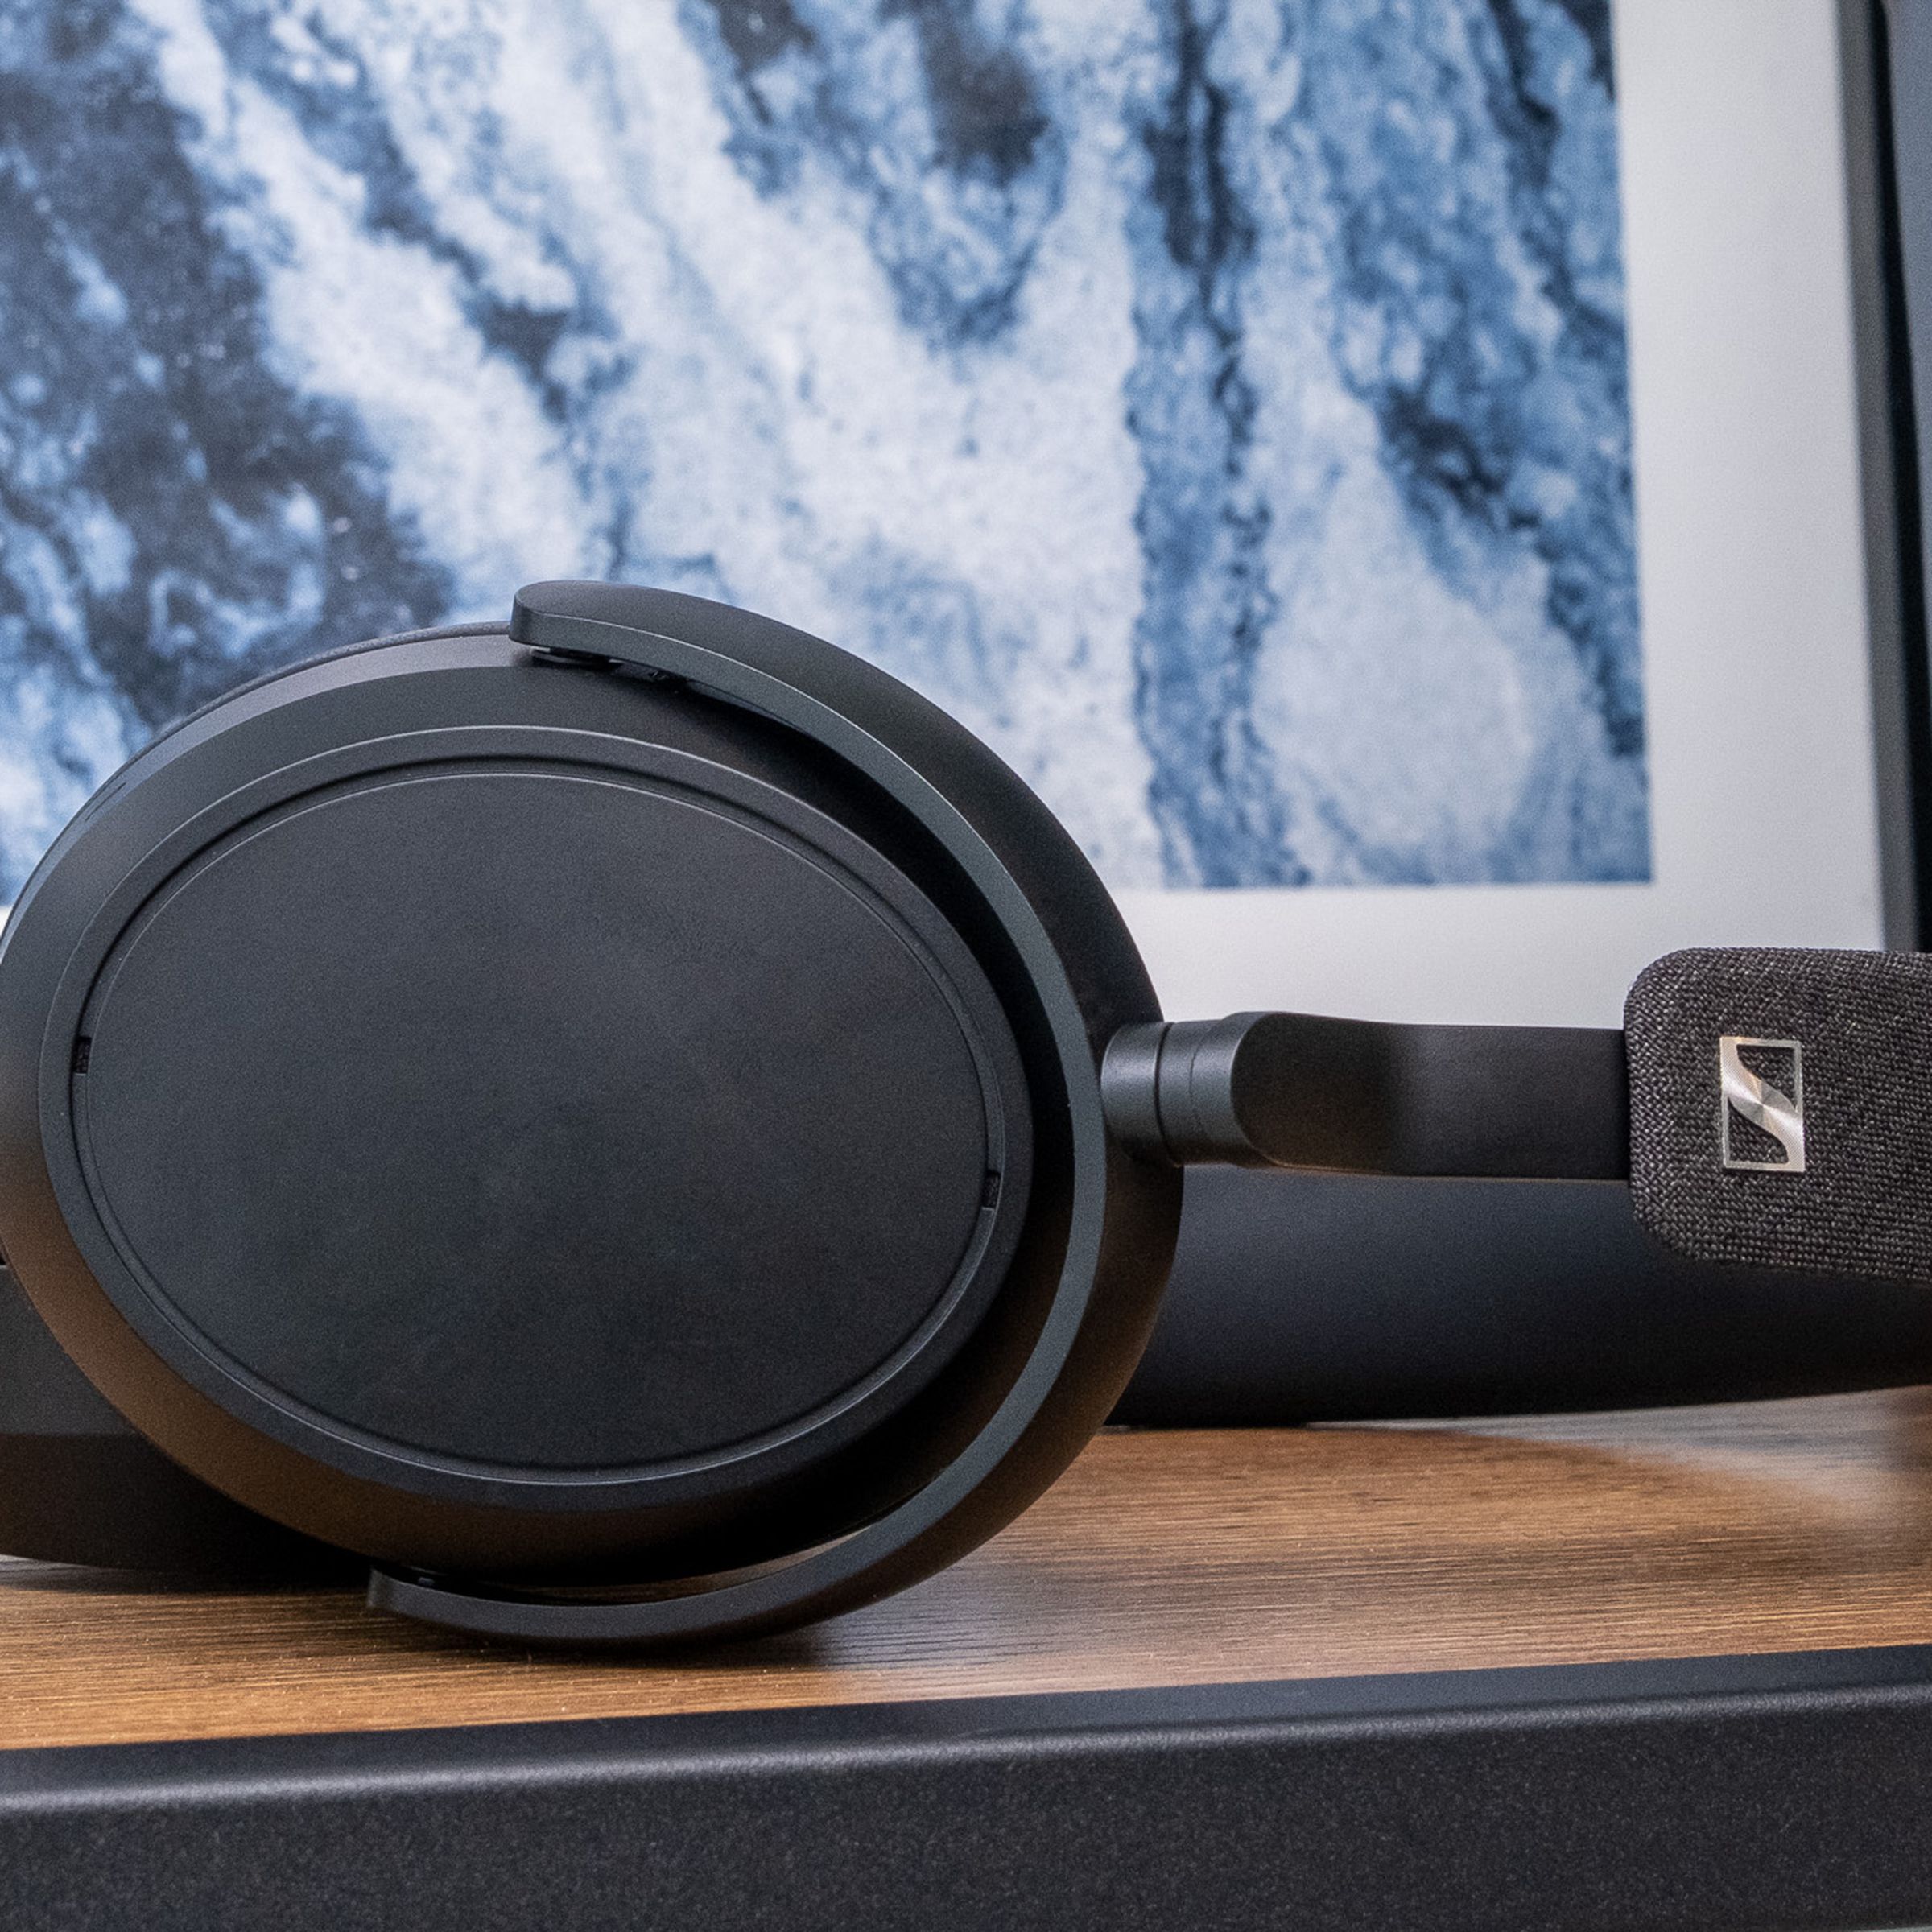 A photo of Sennheiser’s Momentum 4 Wireless headphones on a table.